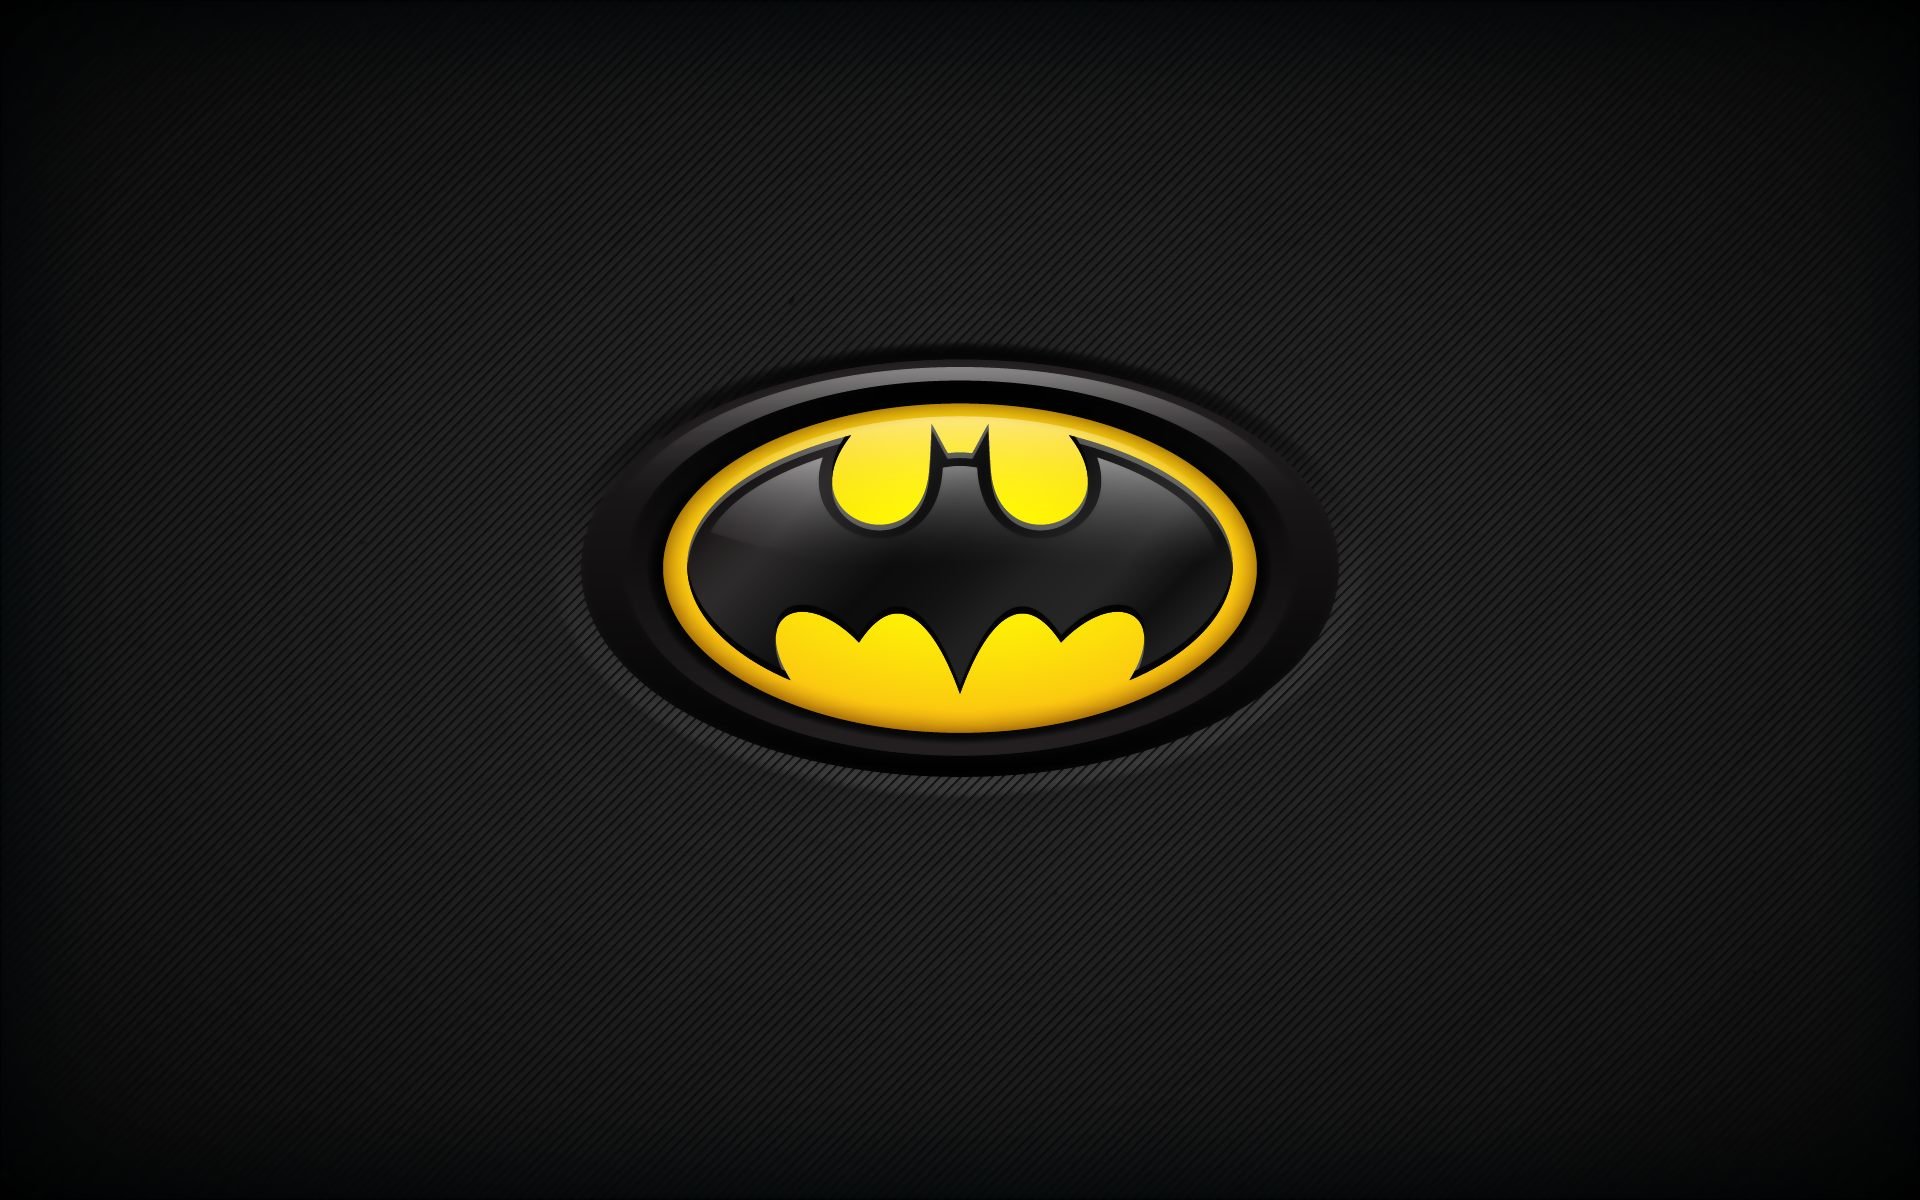 Best Batman Logo (Symbol) wallpaper ID:42501 for High Resolution hd 1920x1200 desktop